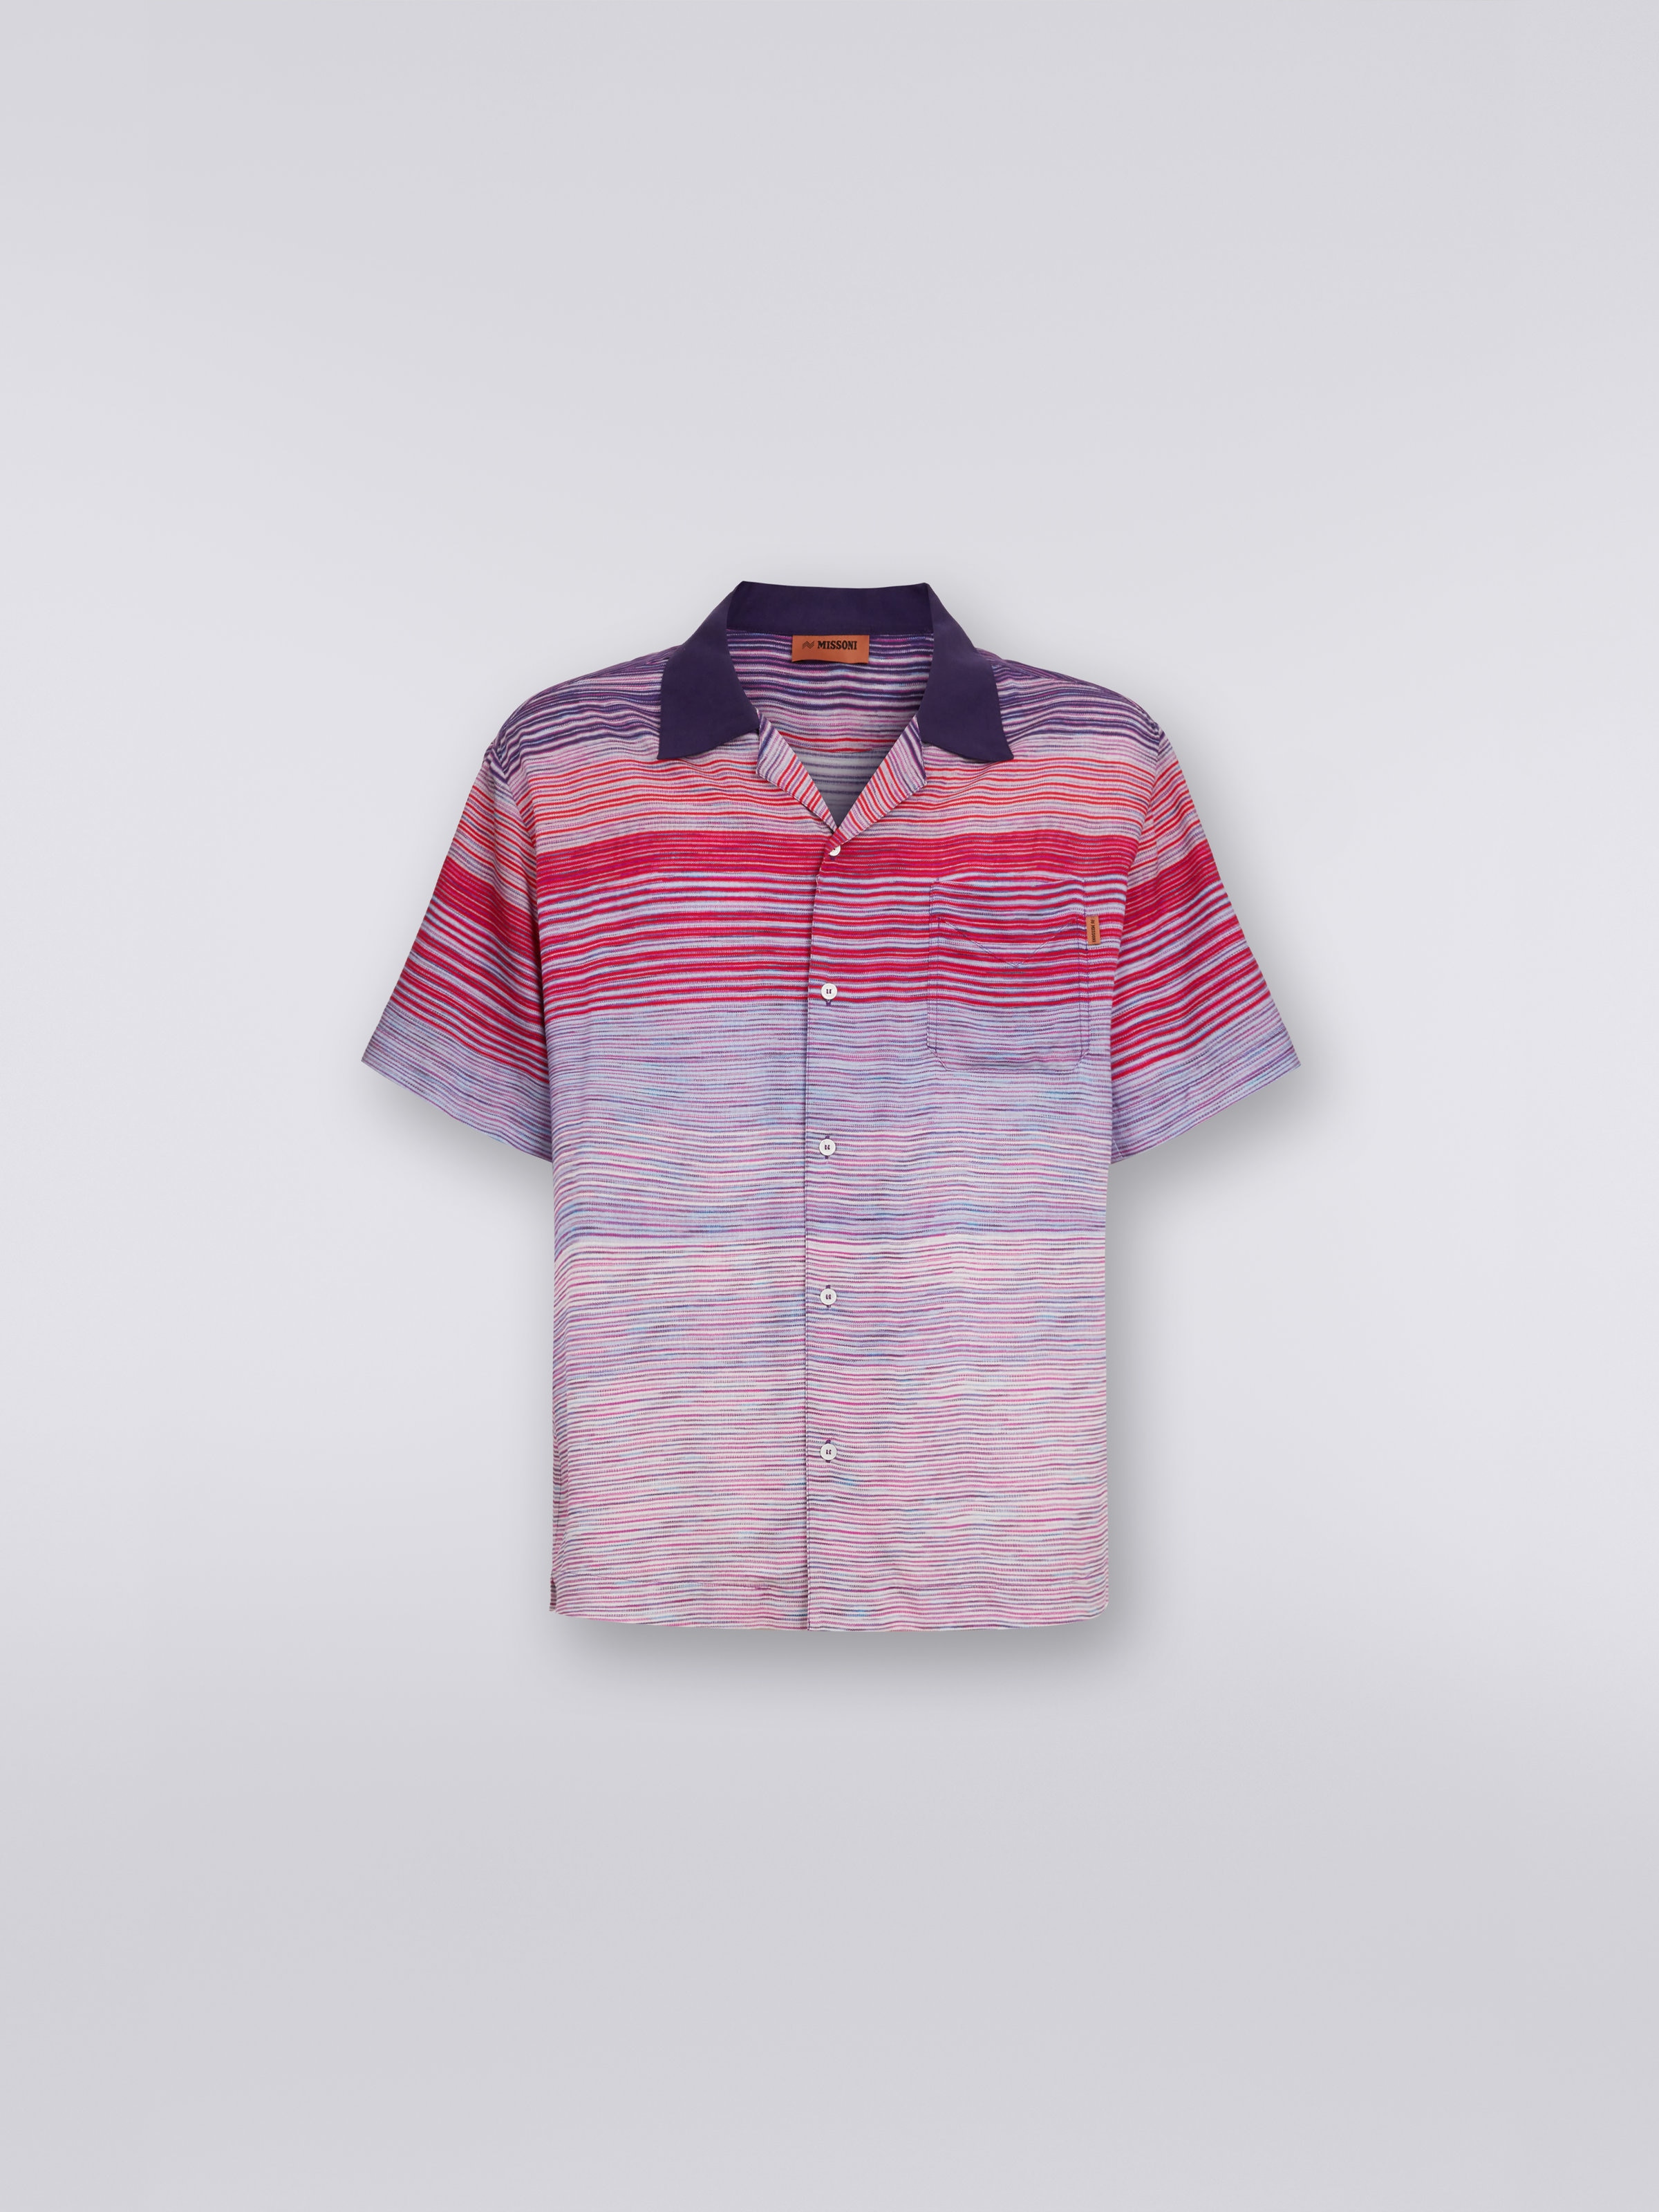 Short-sleeved cotton bowling shirt, Red, Purple & Light Blue - 0